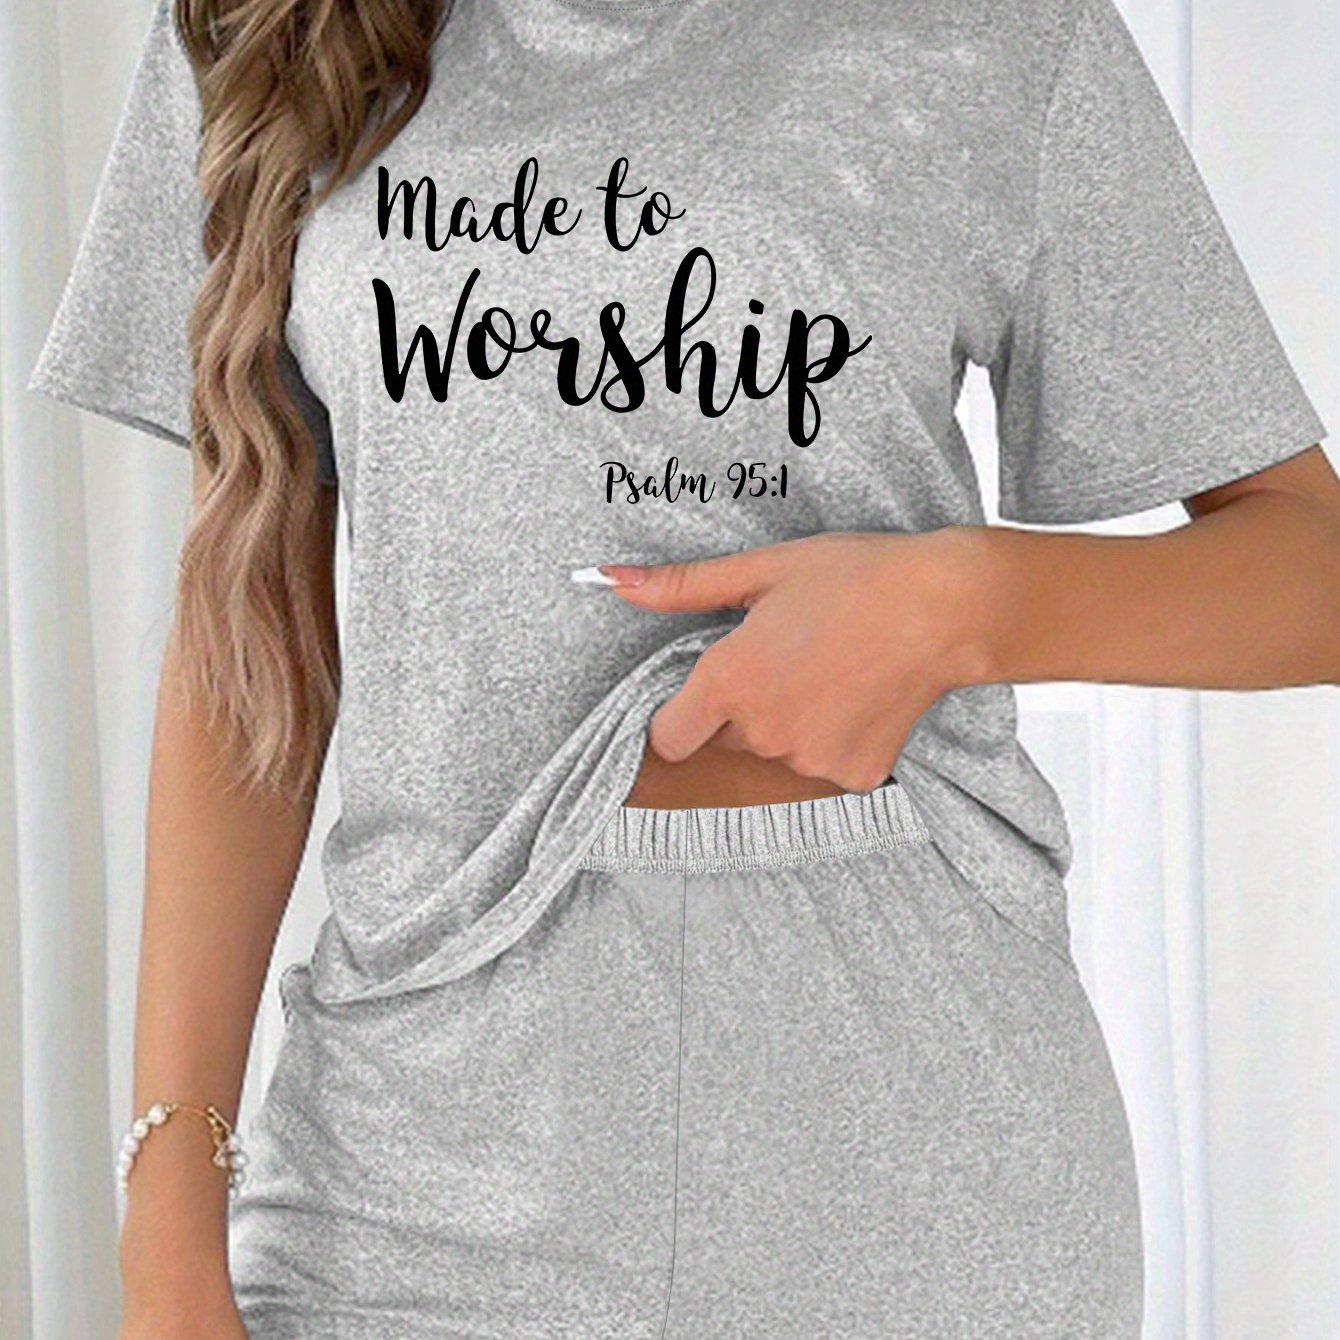 Made To Worship Women's Christian Short Pajama Set claimedbygoddesigns